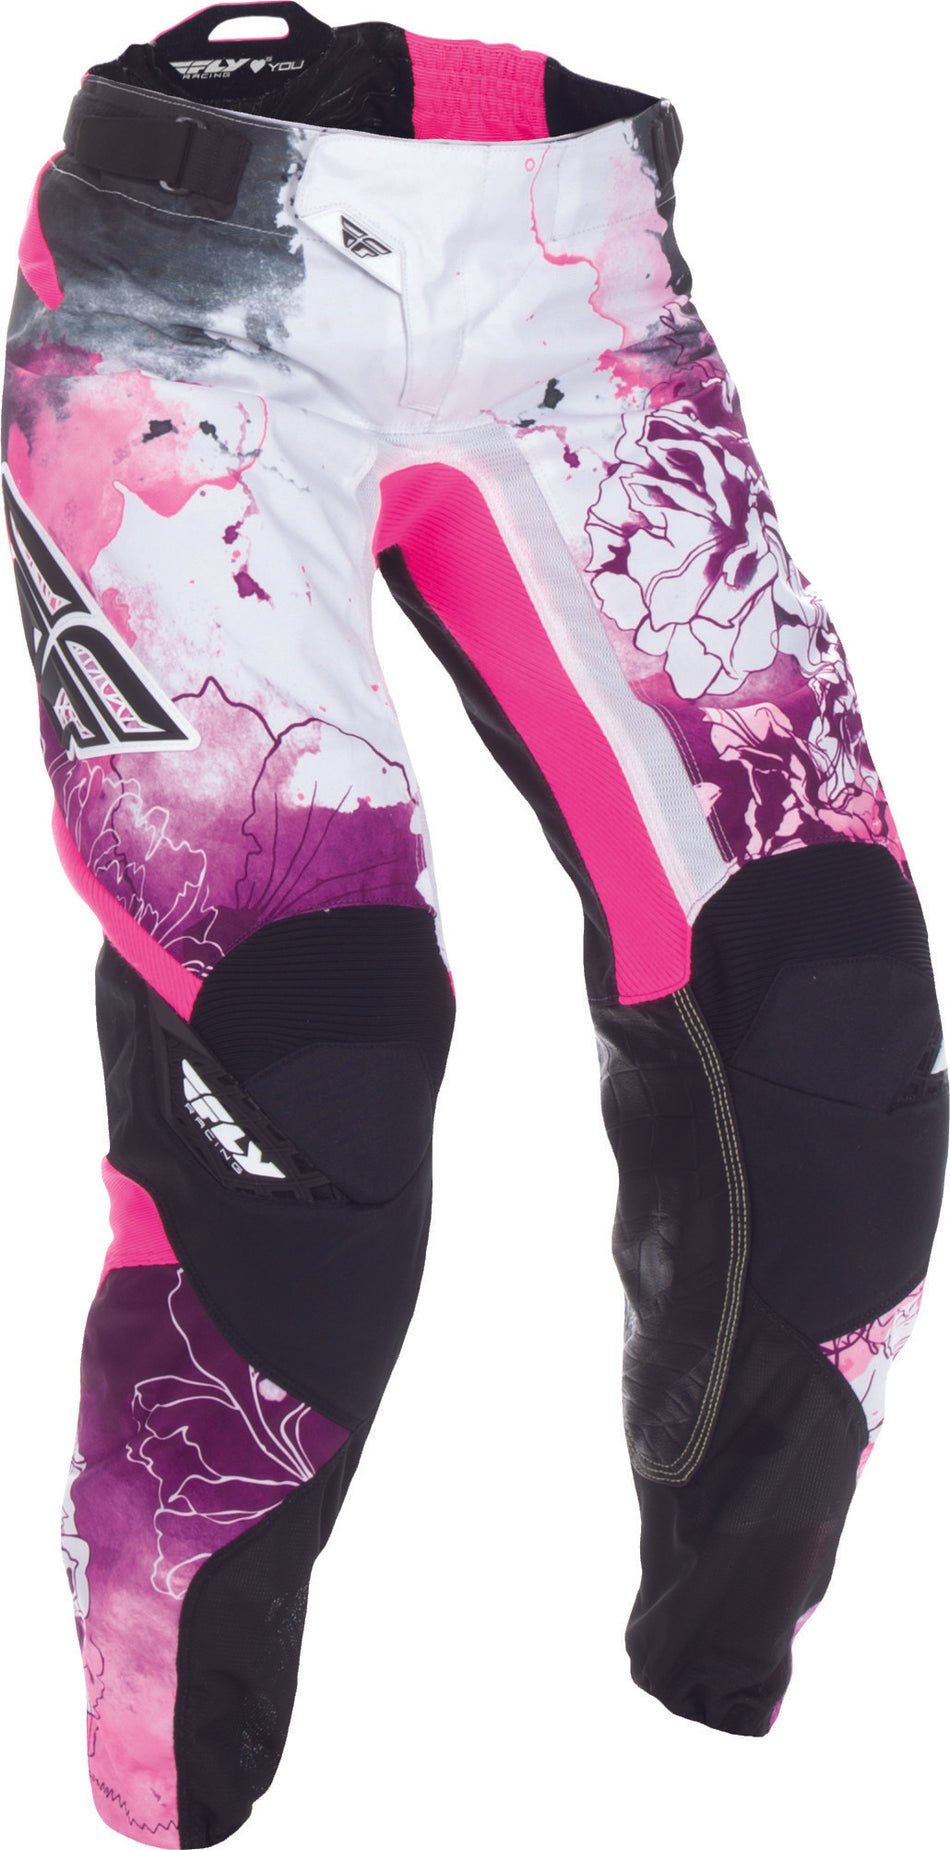 FLY RACING Kinetic Women's Race Pant Pink/Purple Sz 3/4 370-63205